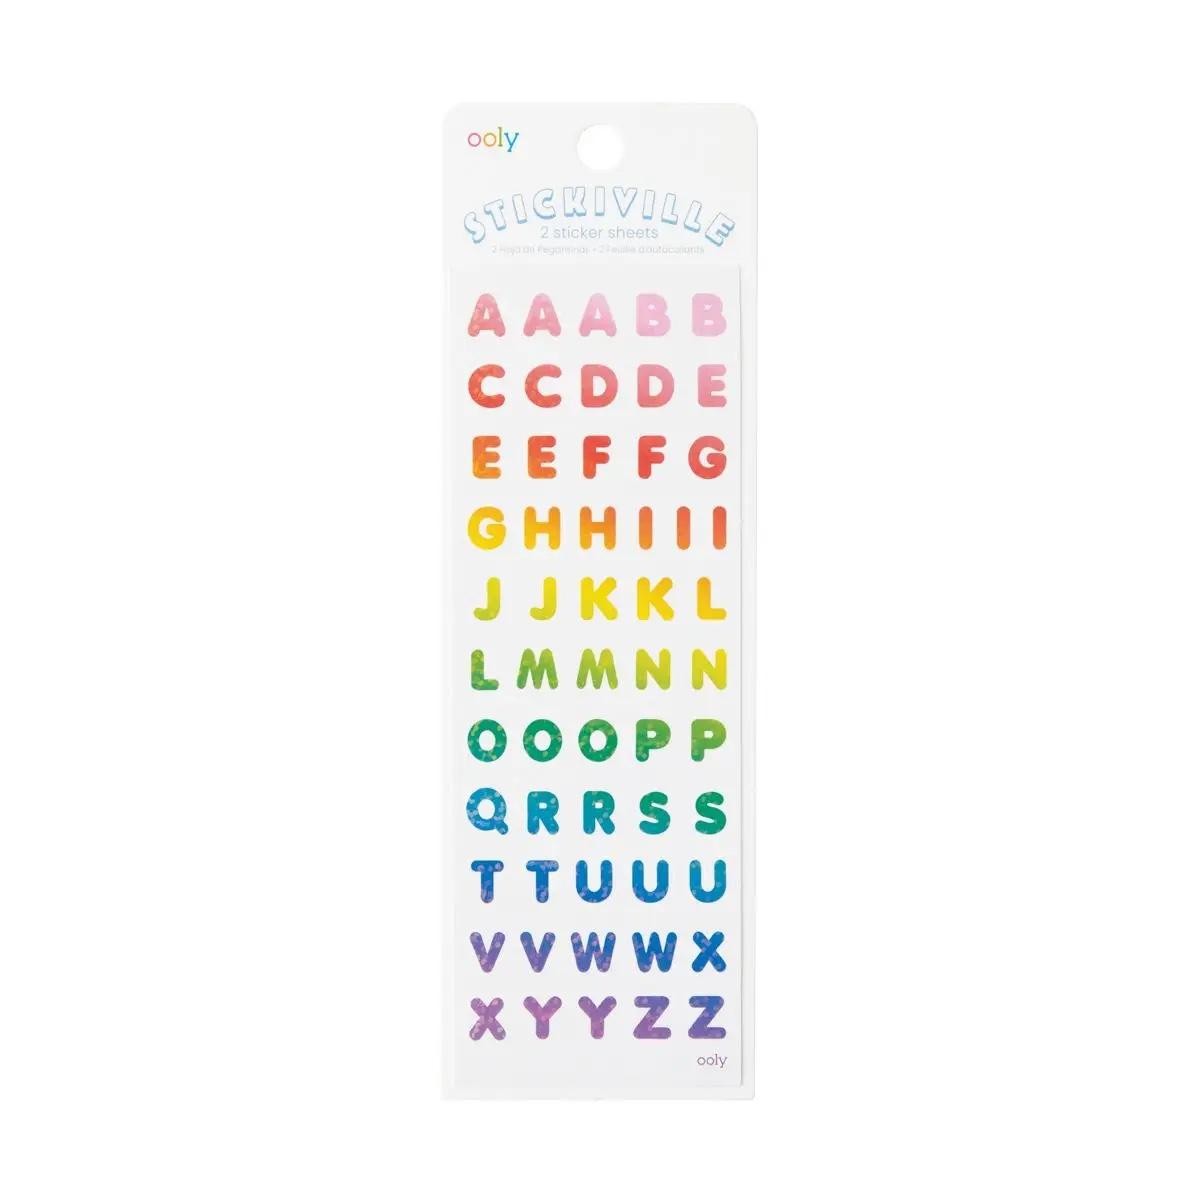 OOL Stickiville rainbow letters